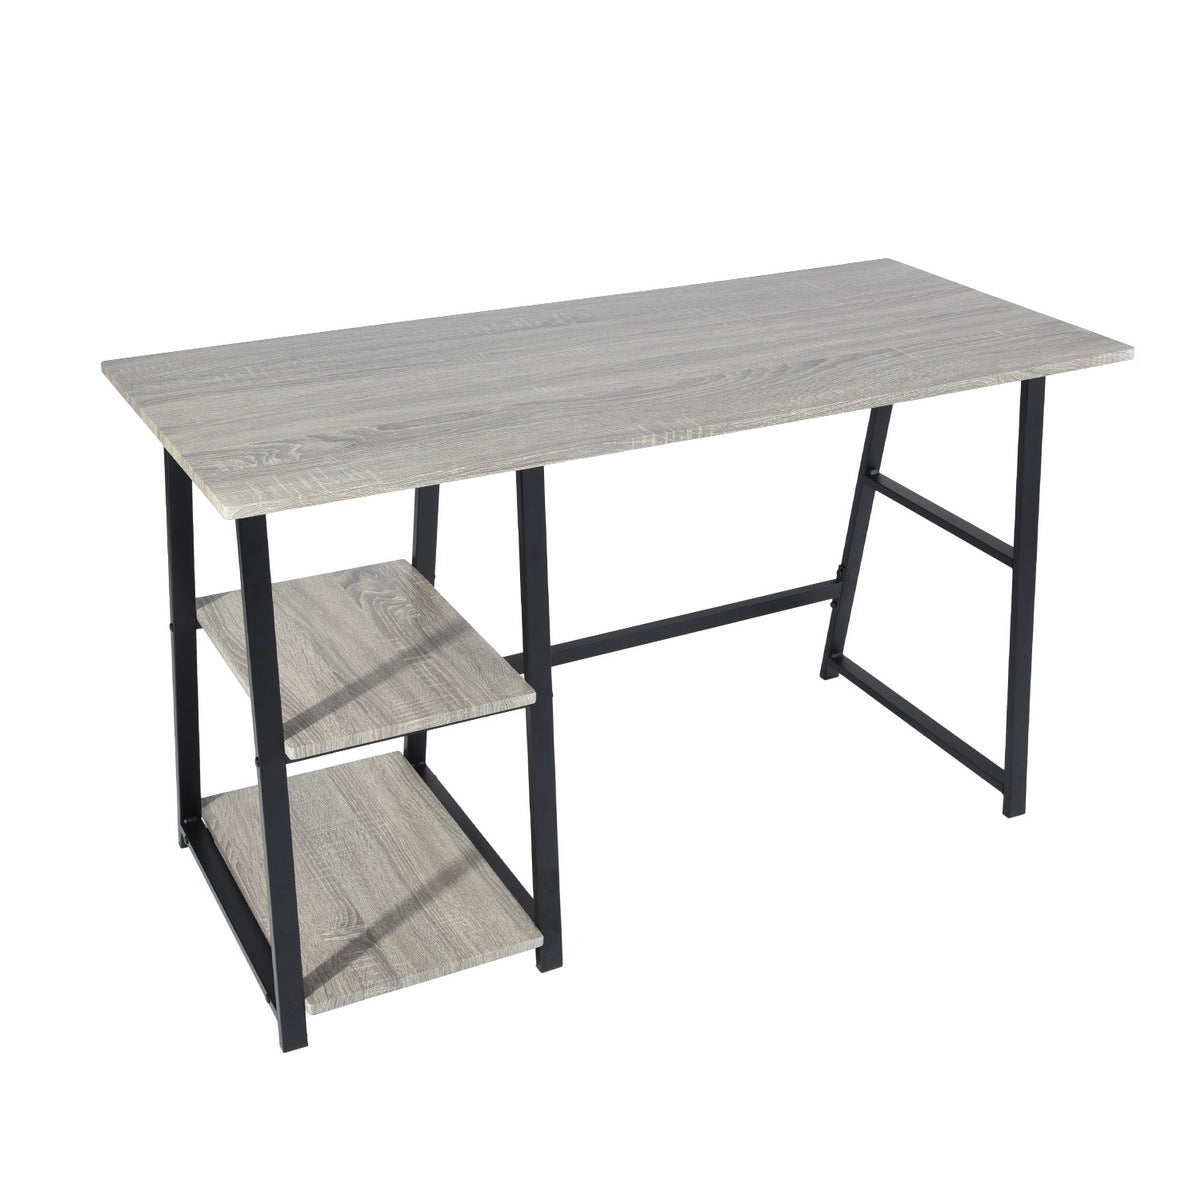 47.4"W X 19.7"D X 28.9"H Wooden Desk with 2 Storage grey-mdf-metal & wood